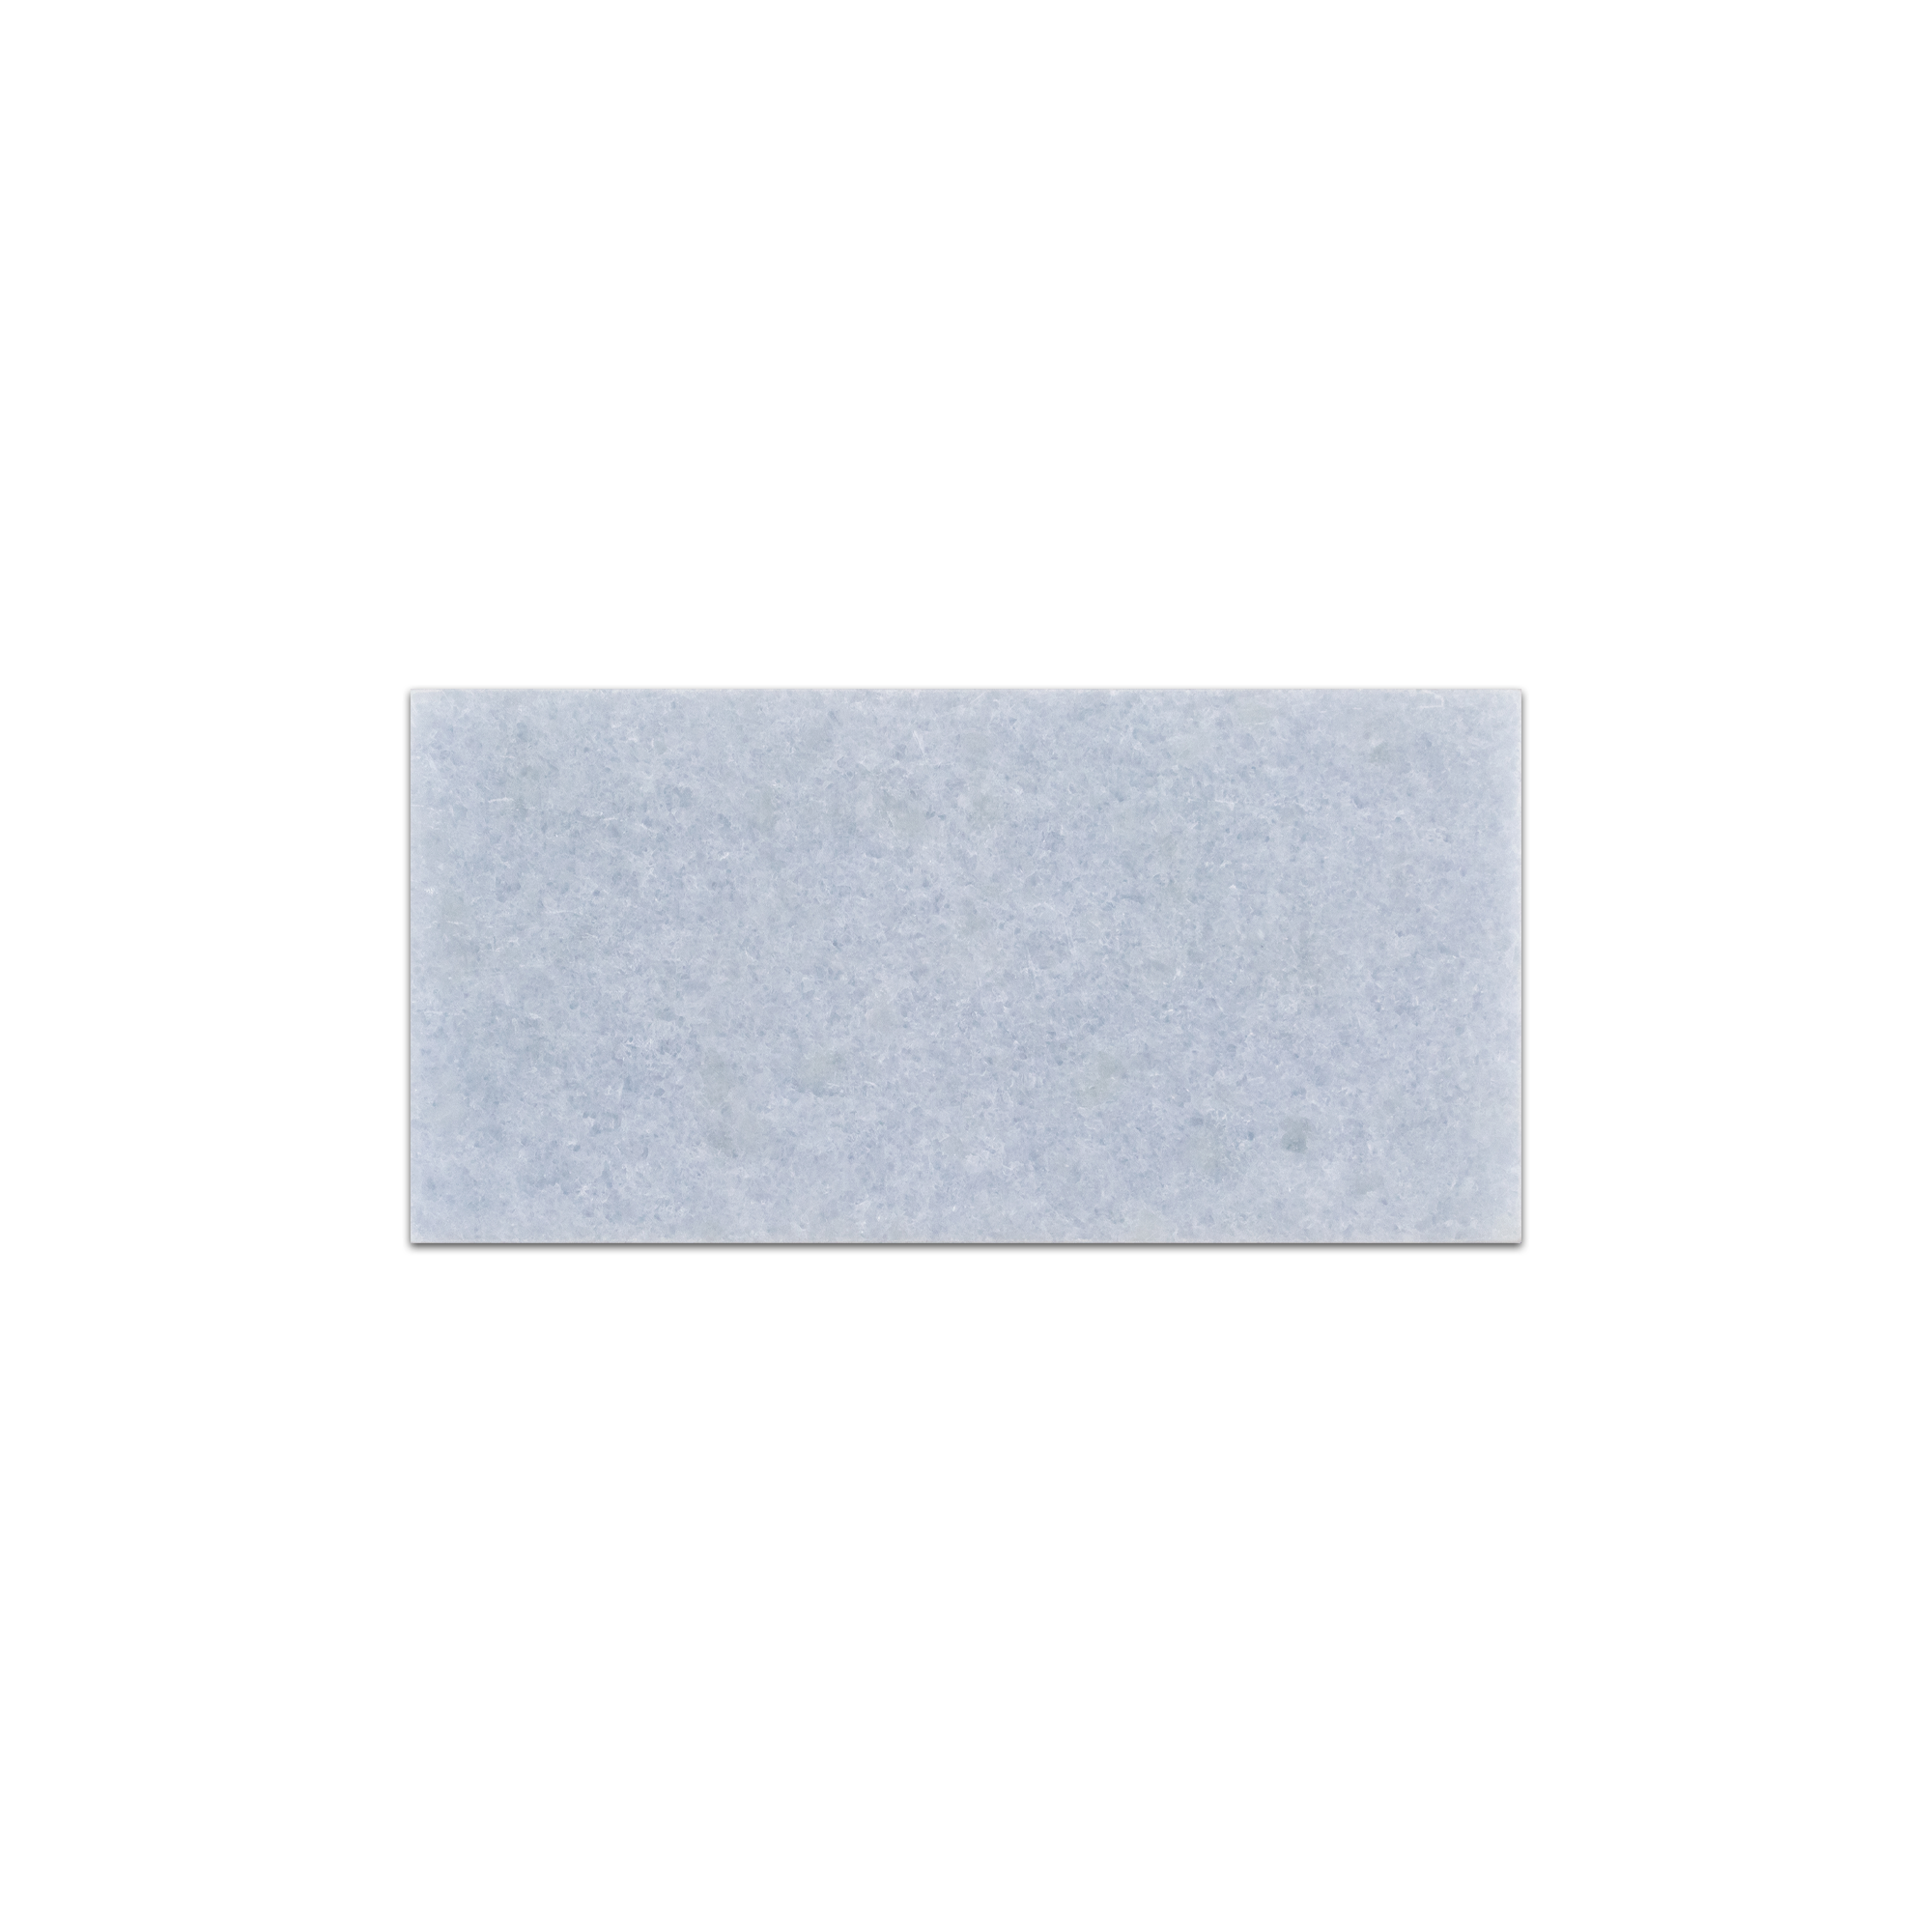 Elon Blue Celeste Marble Rectangle Field Tile, 3x6 Polished Finish, for Elegant Wall & Flooring Designs - Surface Group International.